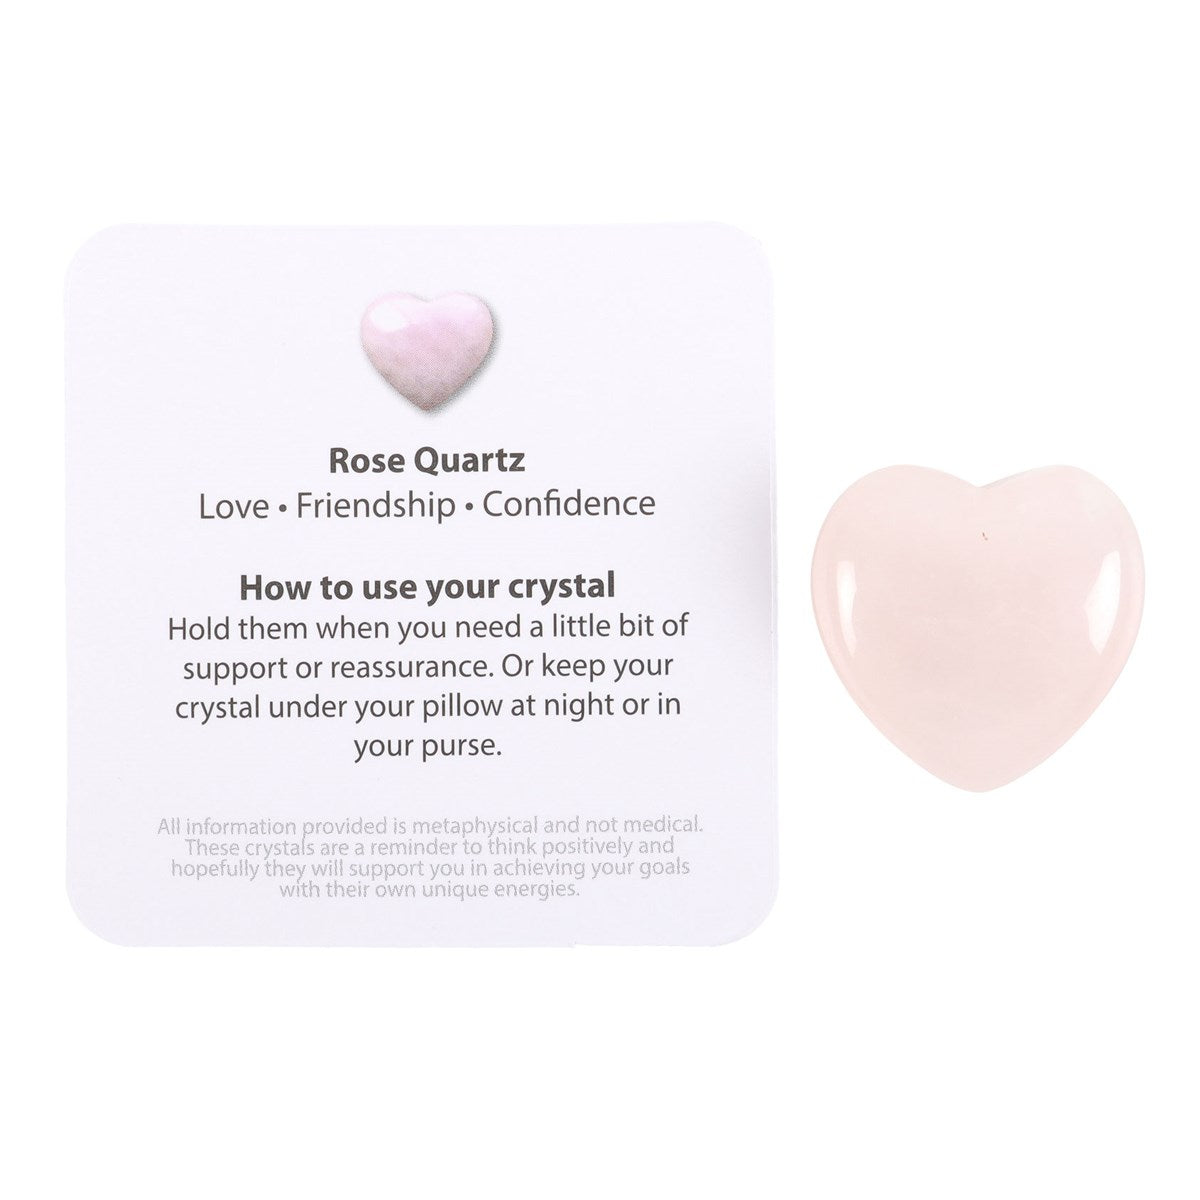 I Love You Rose Quartz Crystal Heart in a Bag